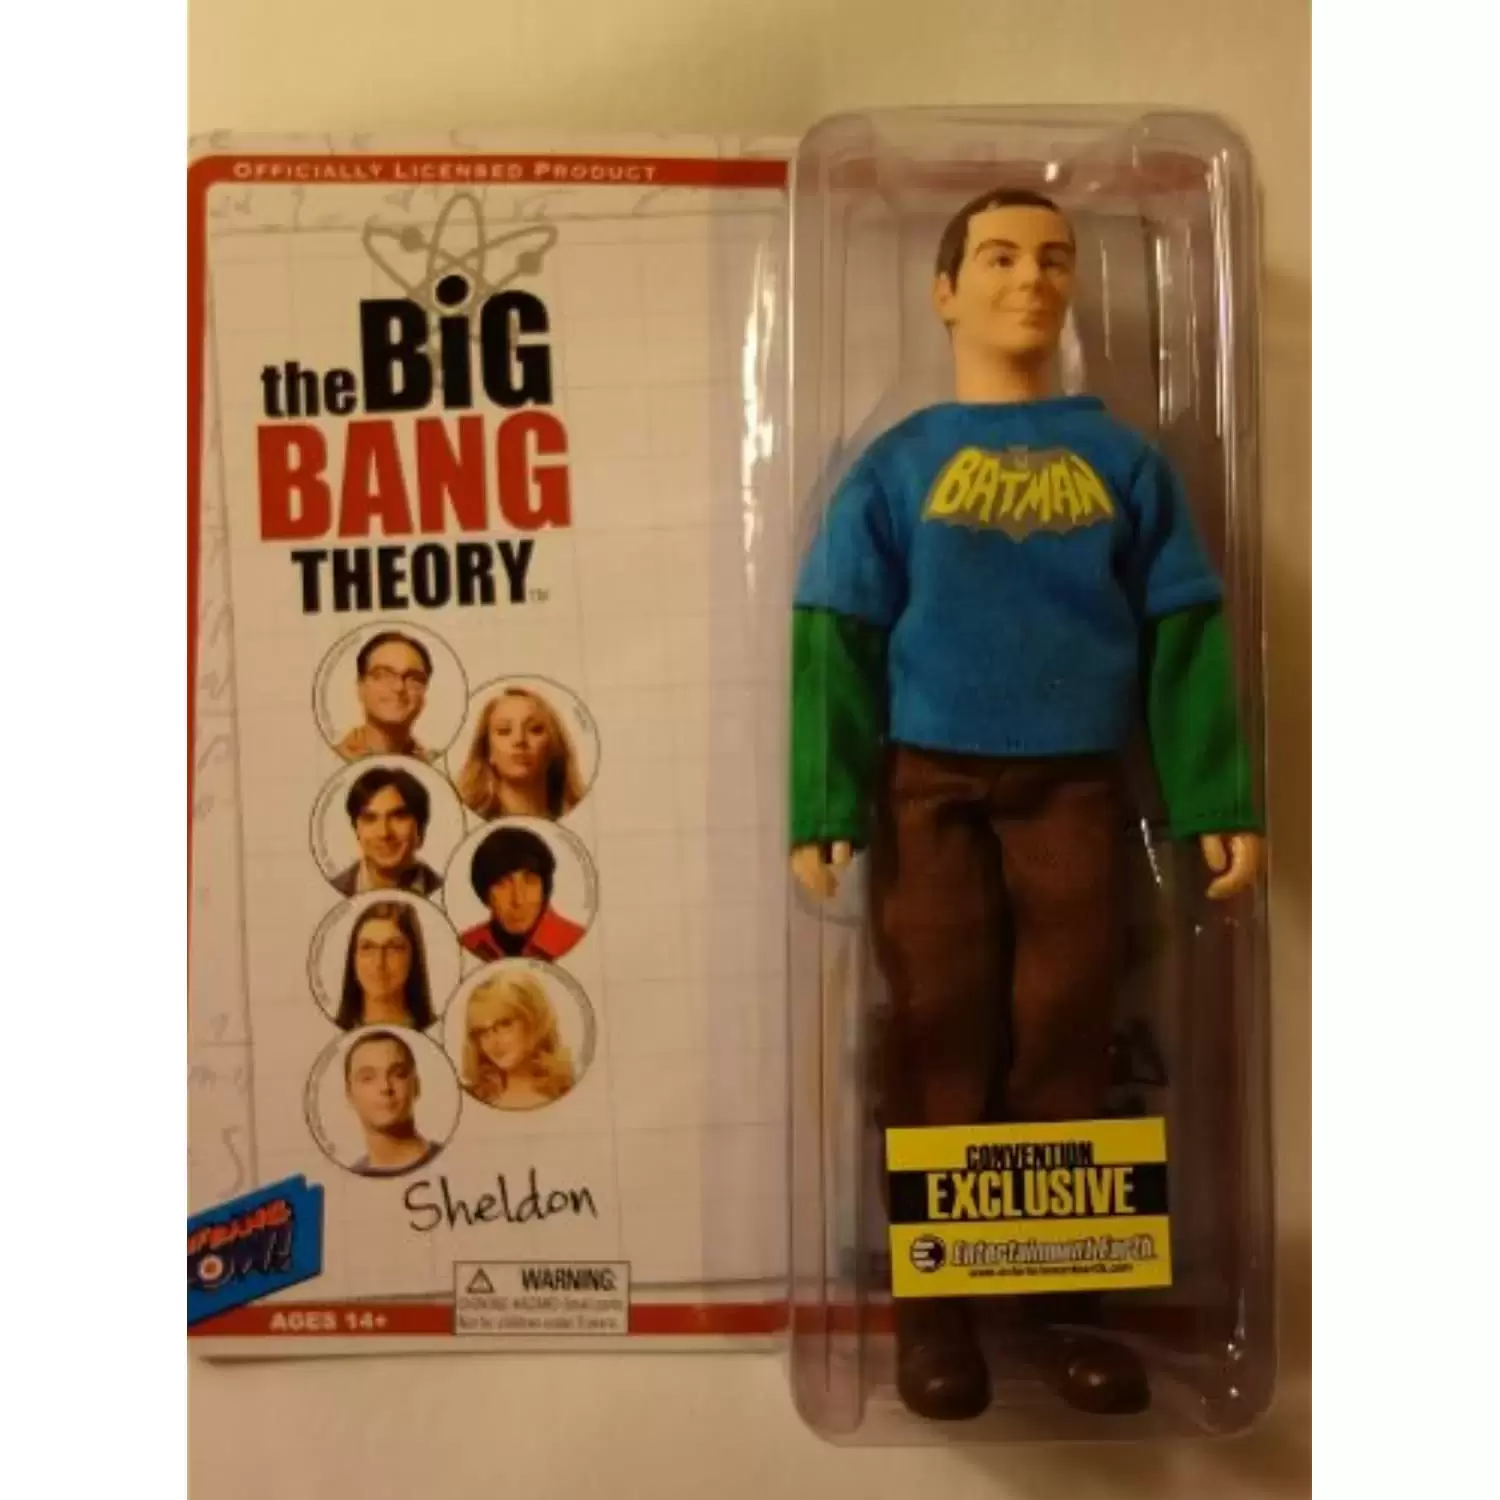 Bif Bang Pow - Big Bang Theory - Sheldon Cooper - Batman Shirt 8\'\' Convention Eclusive